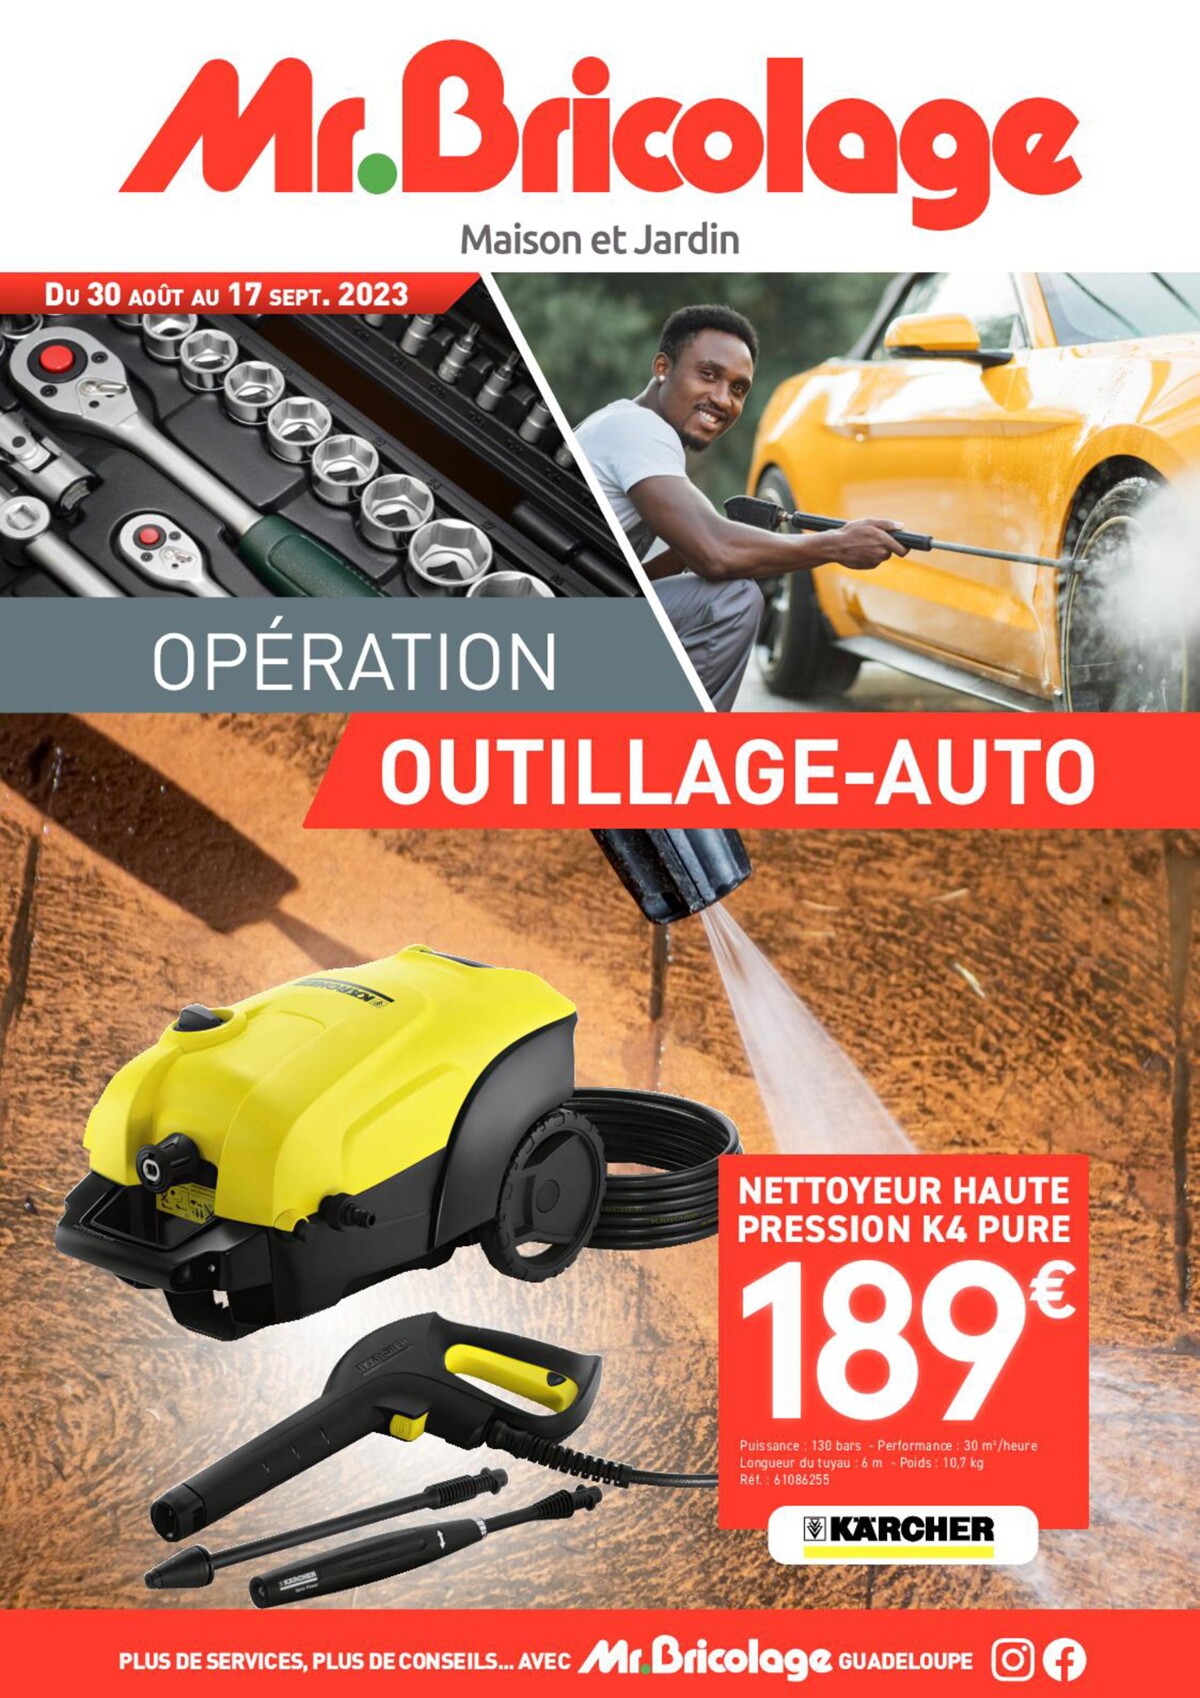 Catalogue Opération Outillage Auto - Mr. Bricolage, page 00001